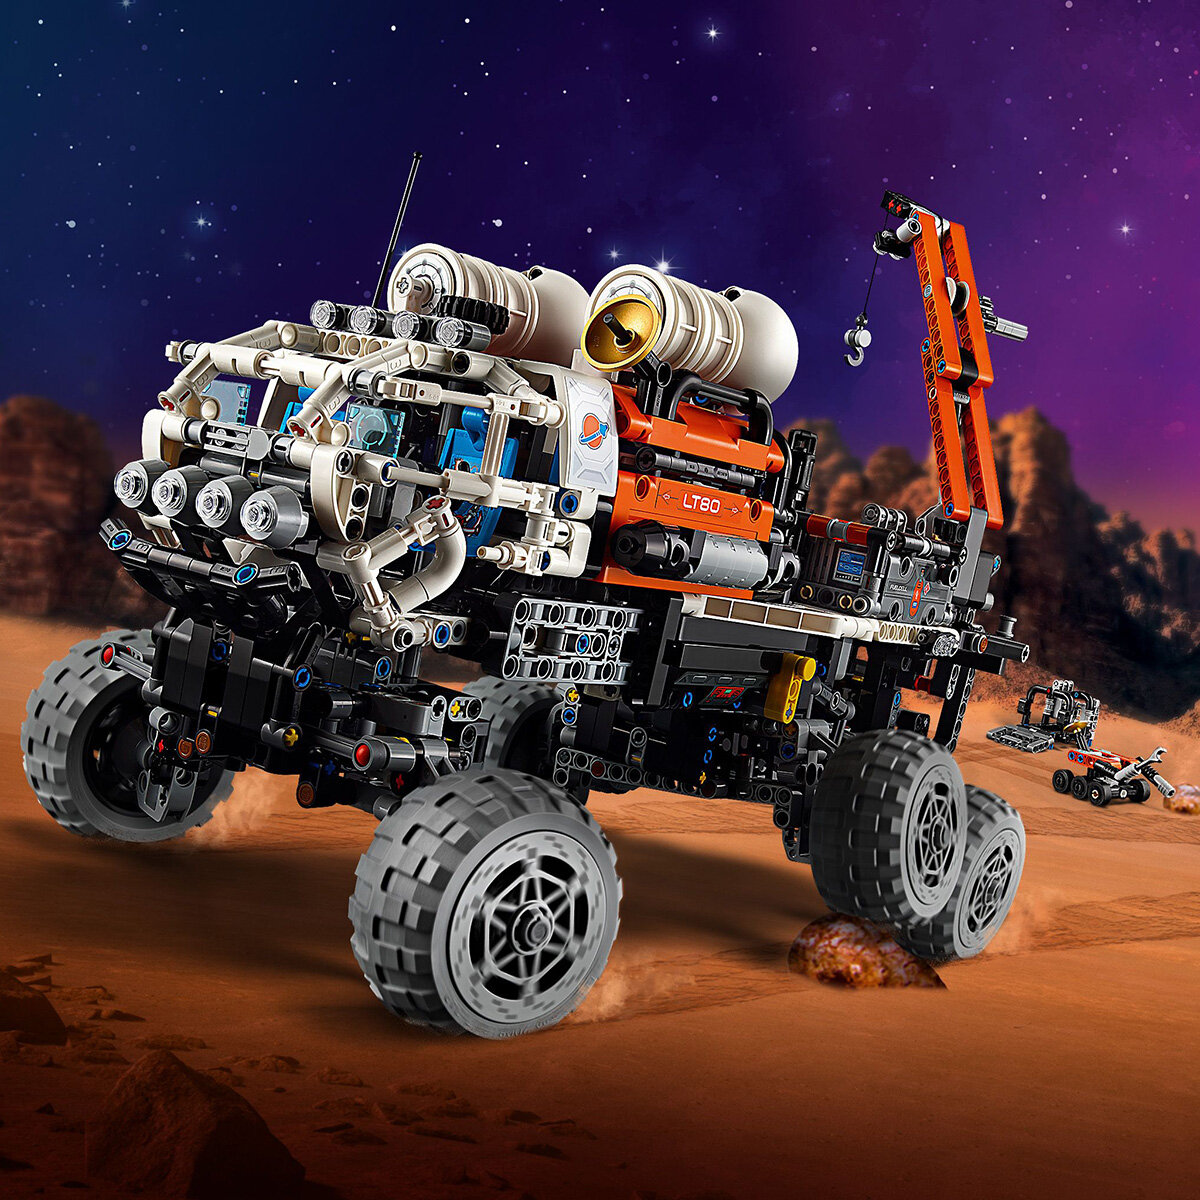 Buy LEGO Technic NASA Mars Exploration Crew Lifestyle Image at Costco.co.uk